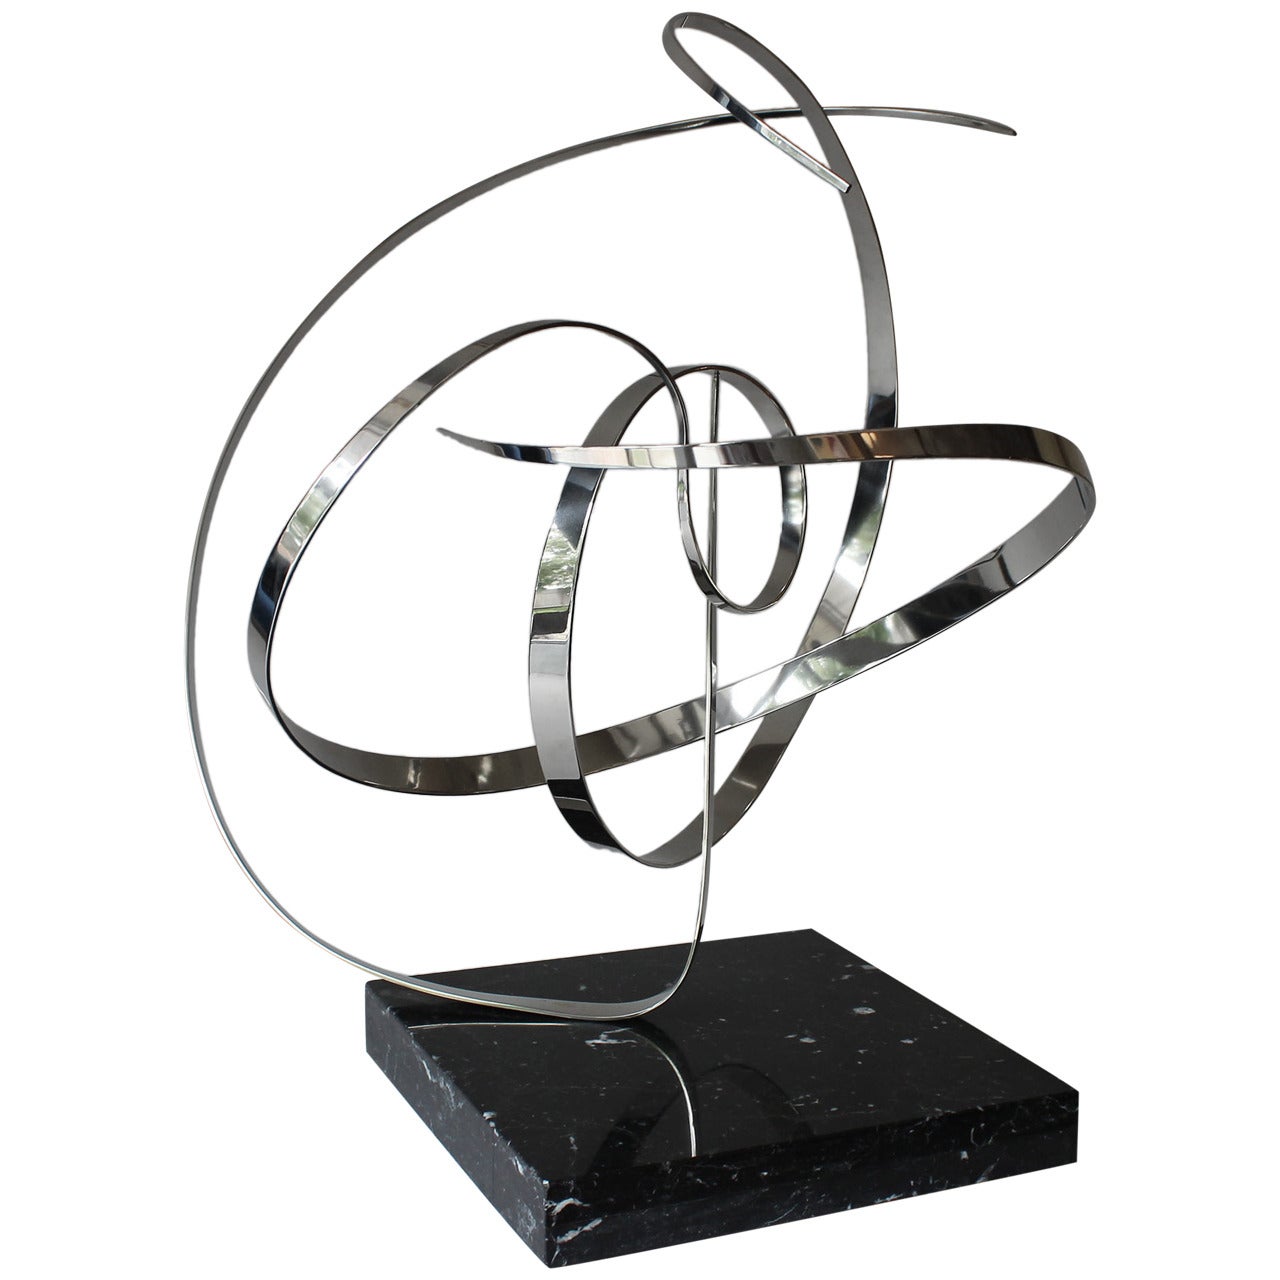 Michael Cutler Kinetic Sculpture For Sale